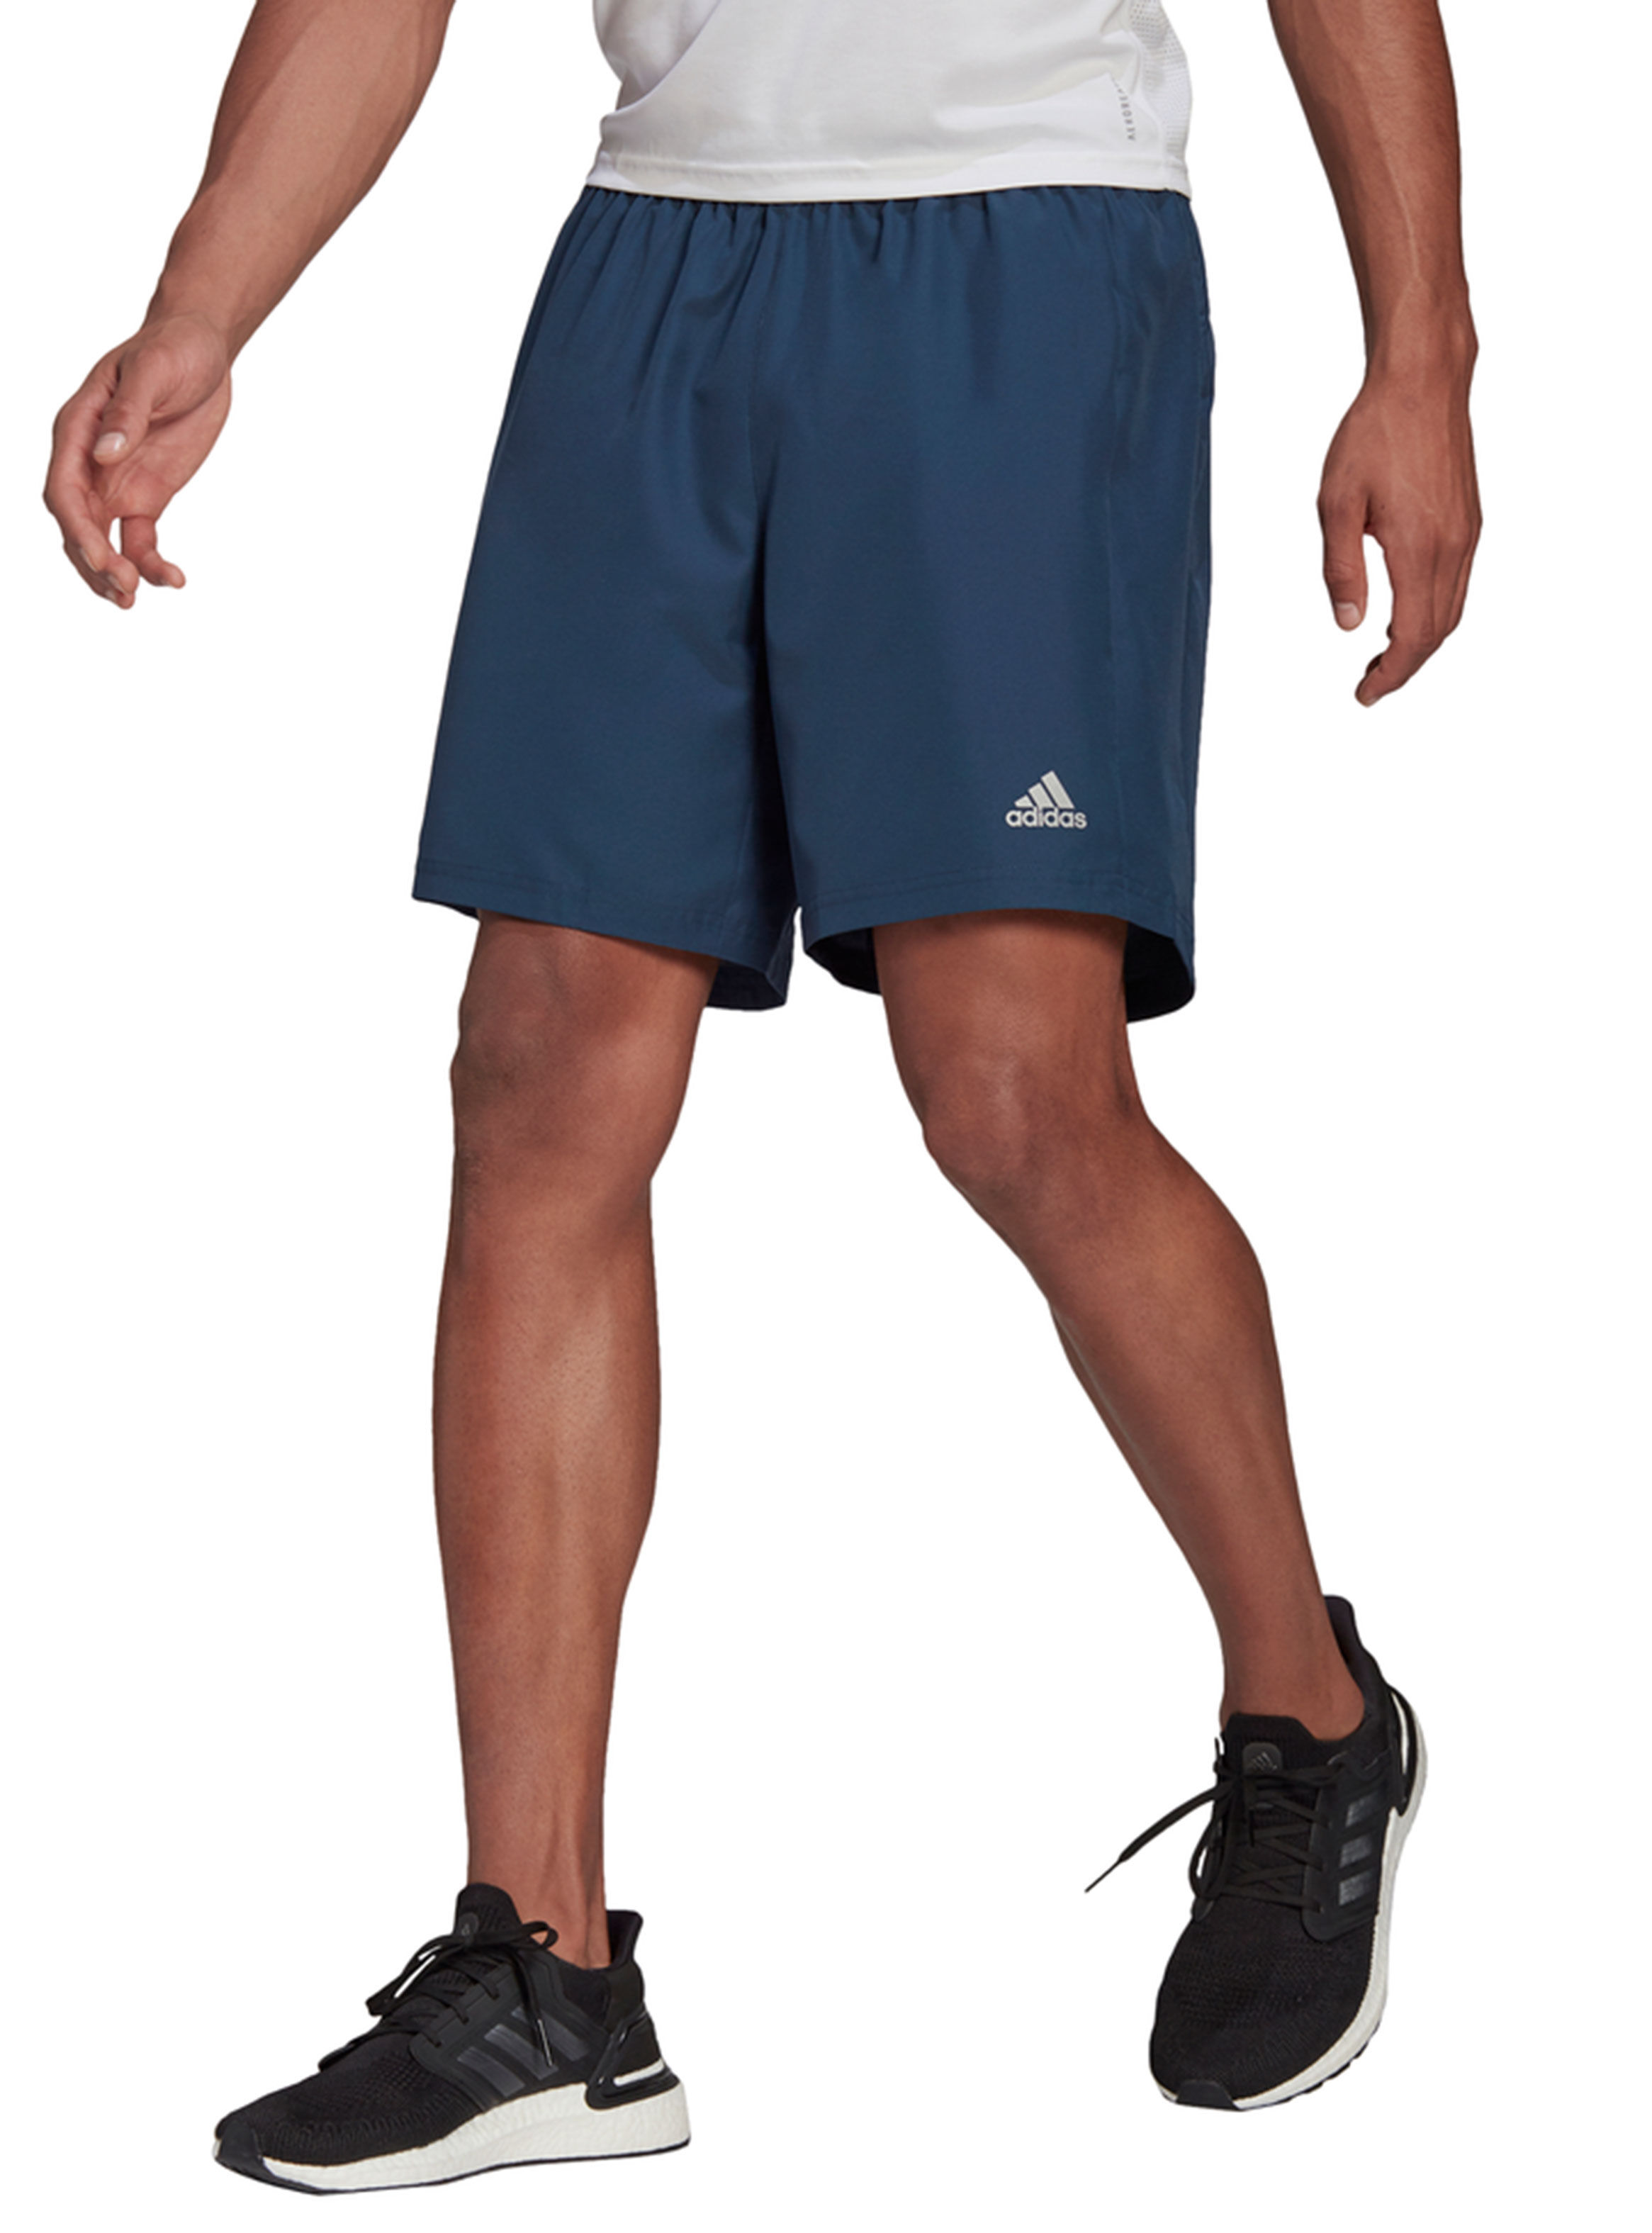 Шорты run. Шорты adidas Run. Adidas Running шорты мужские. Adidas Run it short. Adidas own the Run 7 inch Mens Running shorts.